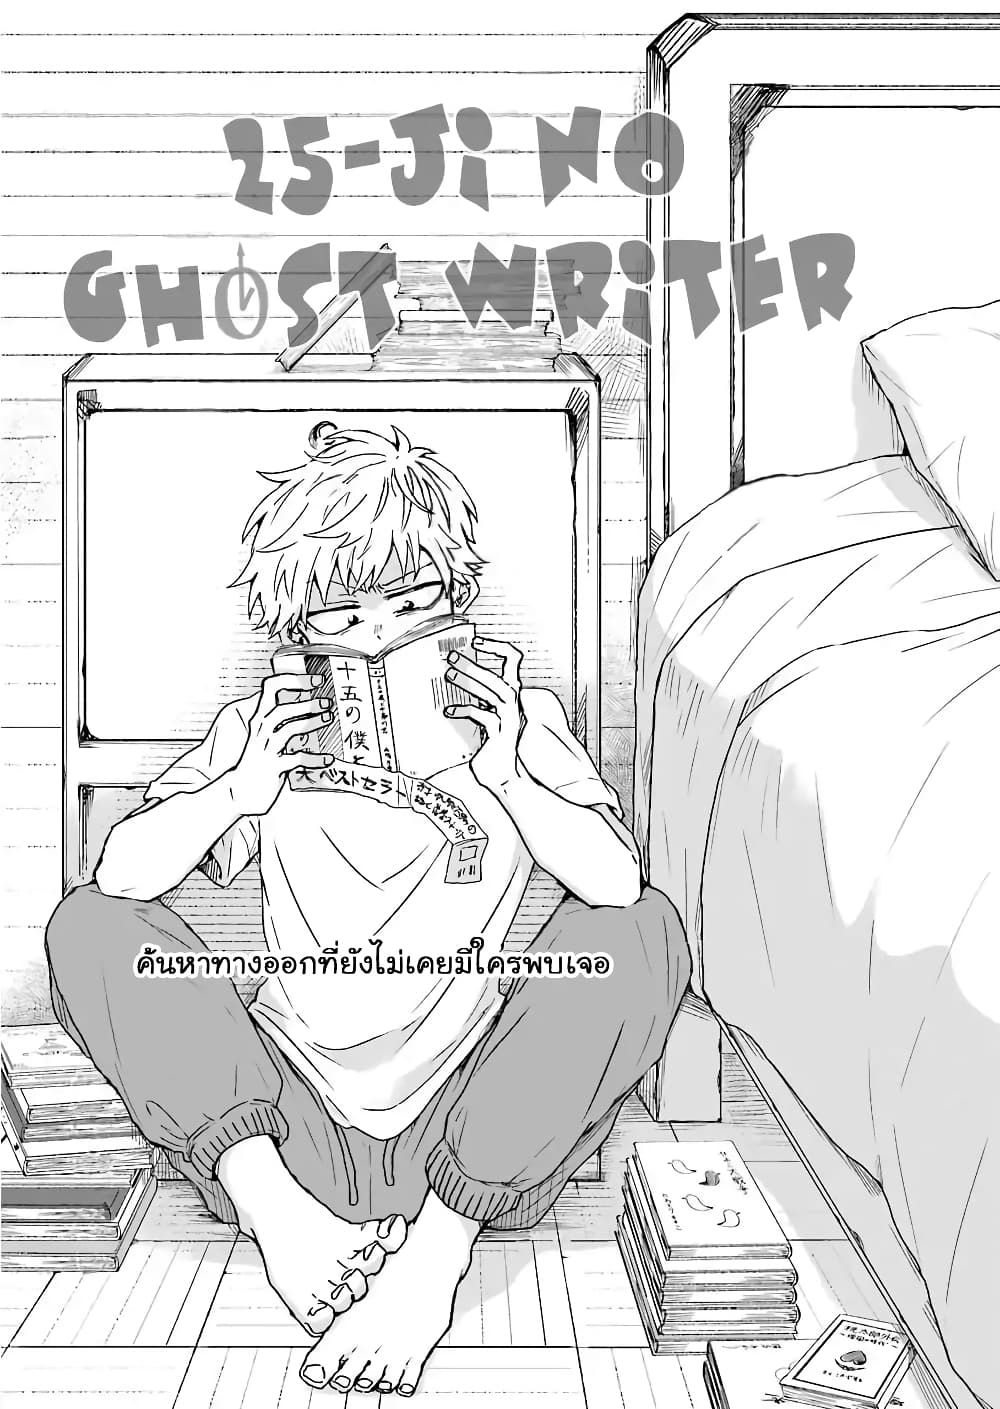 25 ji no Ghost Writer 7.5 (1)